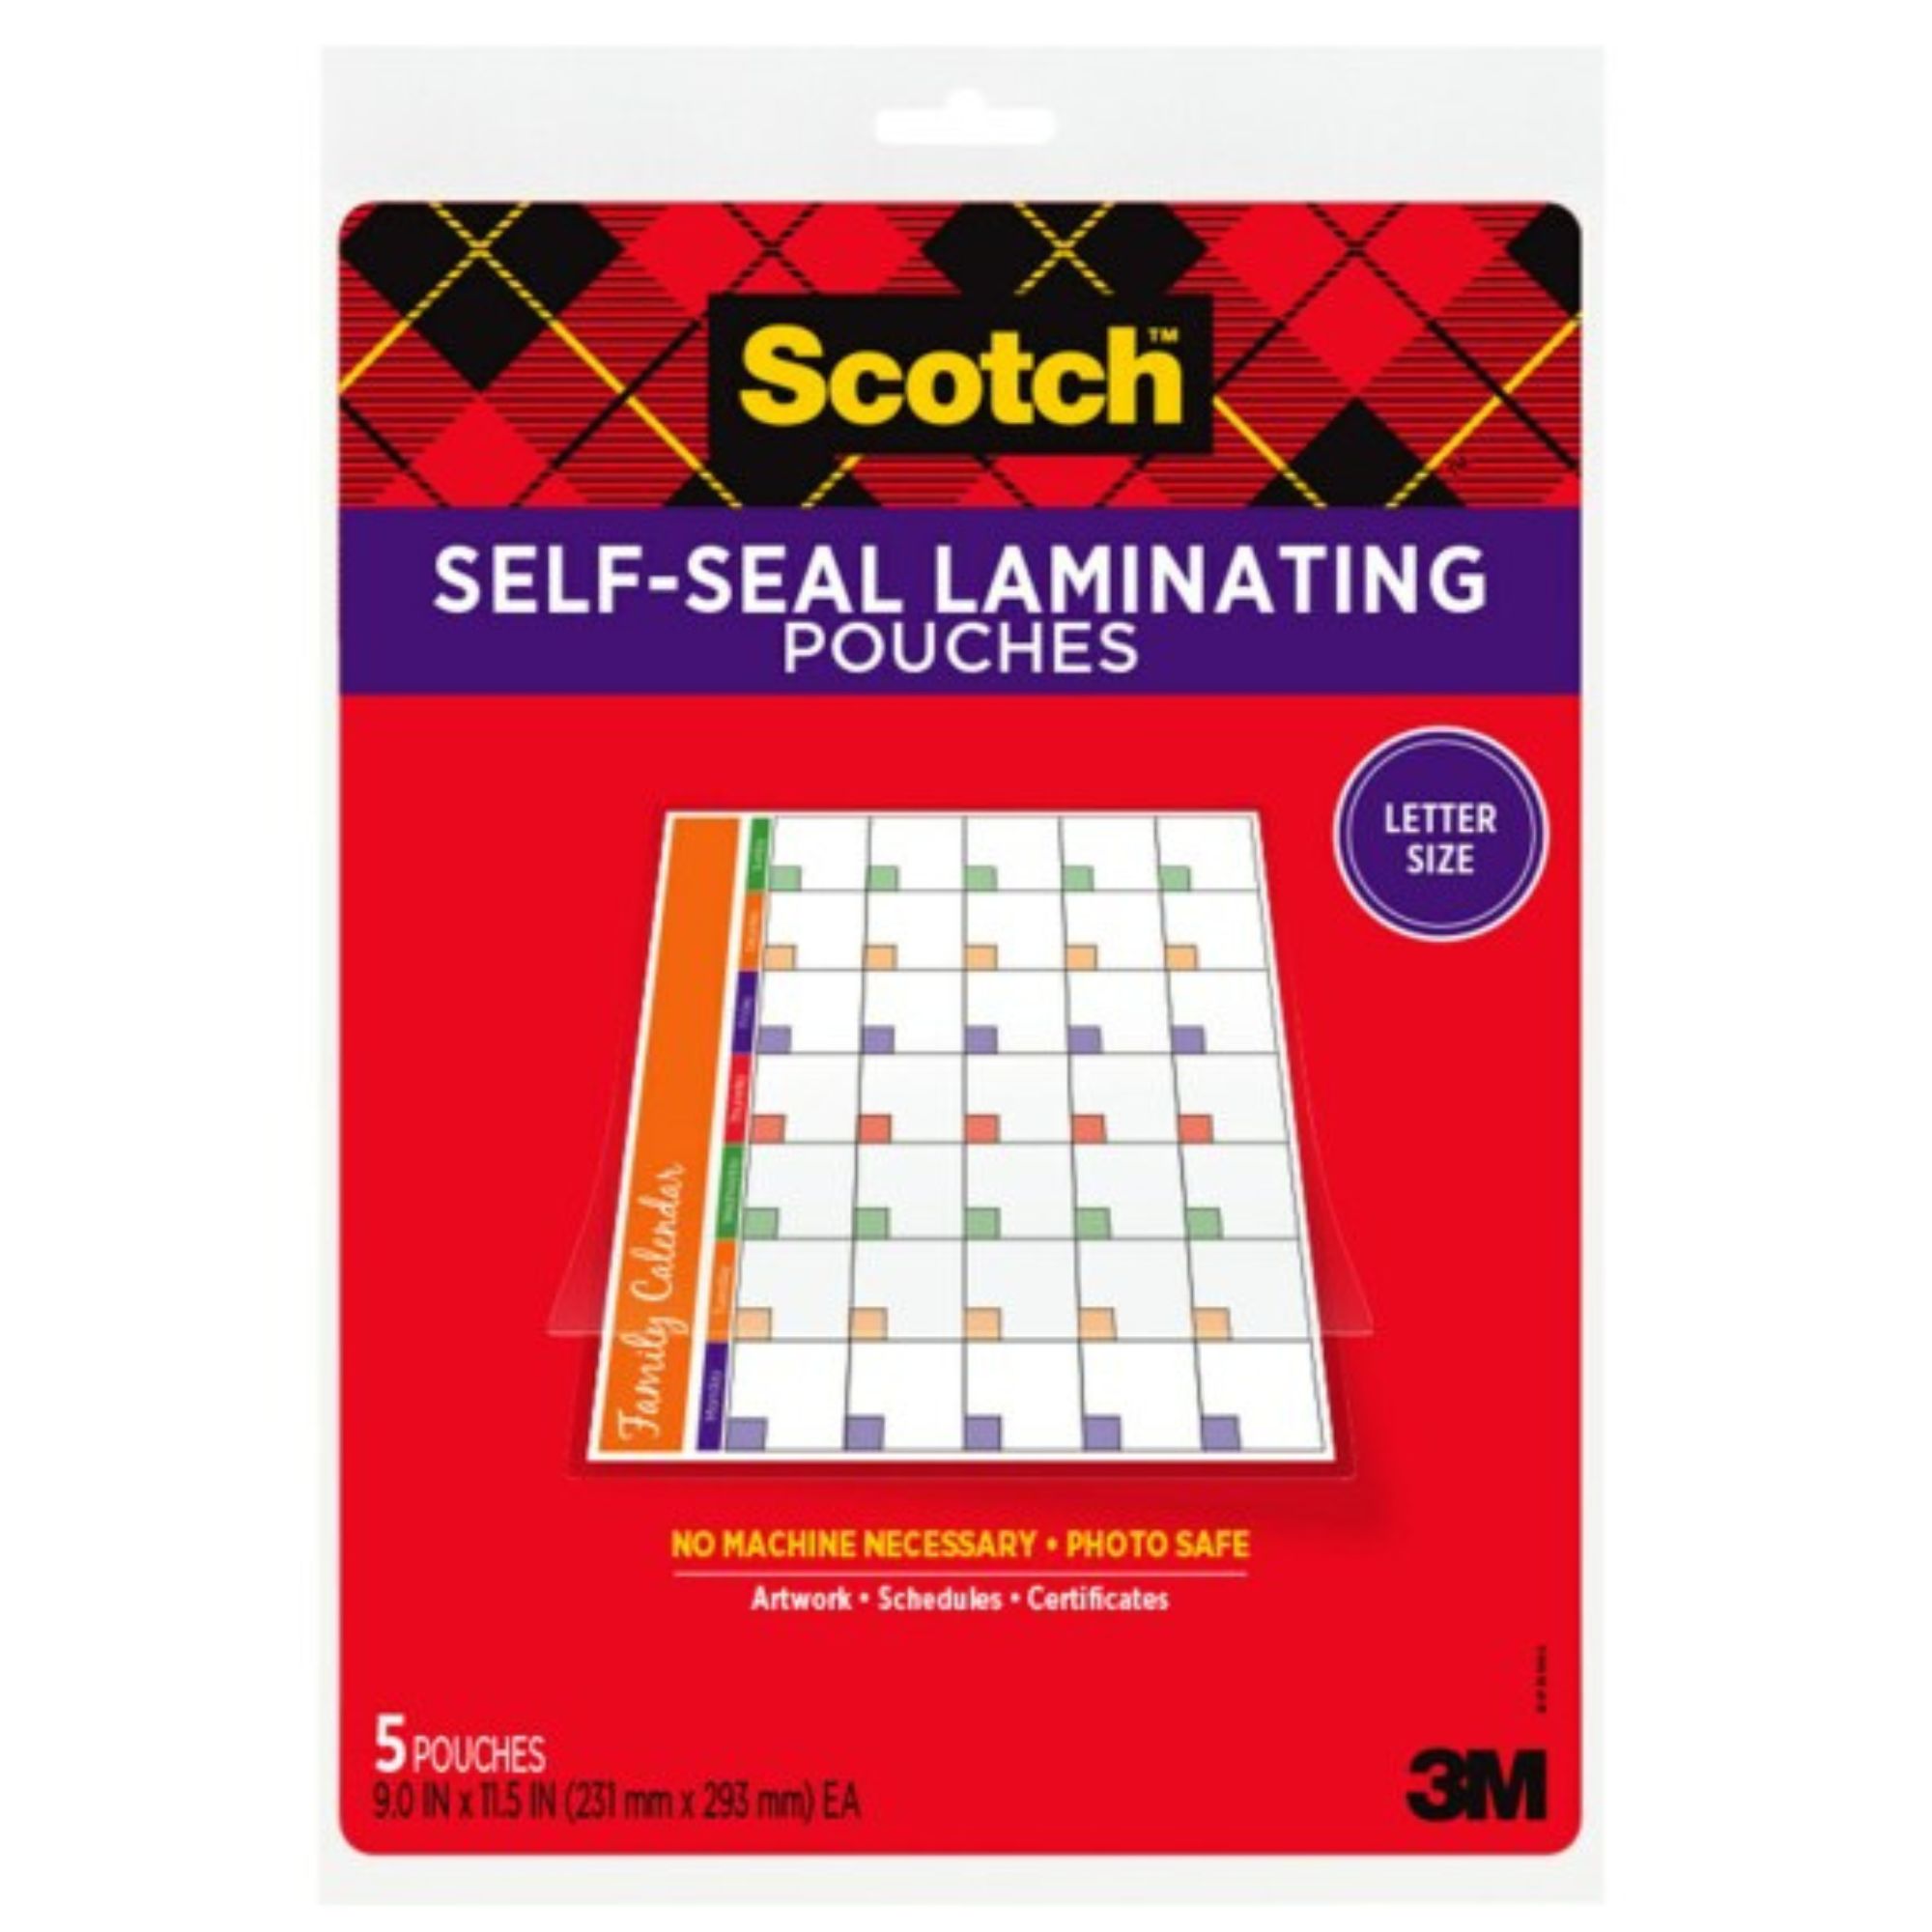 Scotch Self-Sealing Laminating Pouches [No Machine Required]